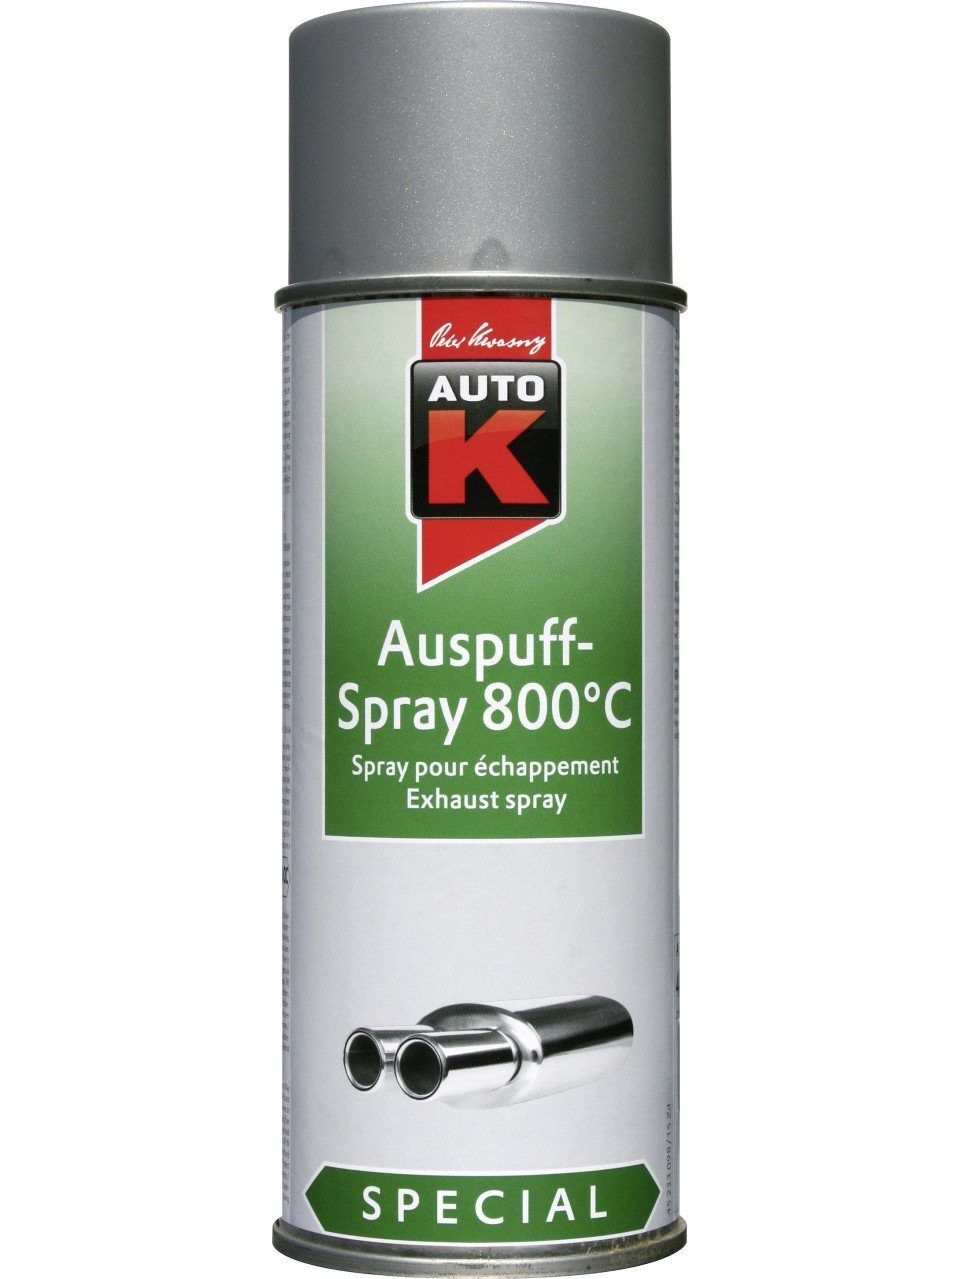 Auto-K Lack Auto-K Auspuff-Spray 800°C Spezial silber 400ml